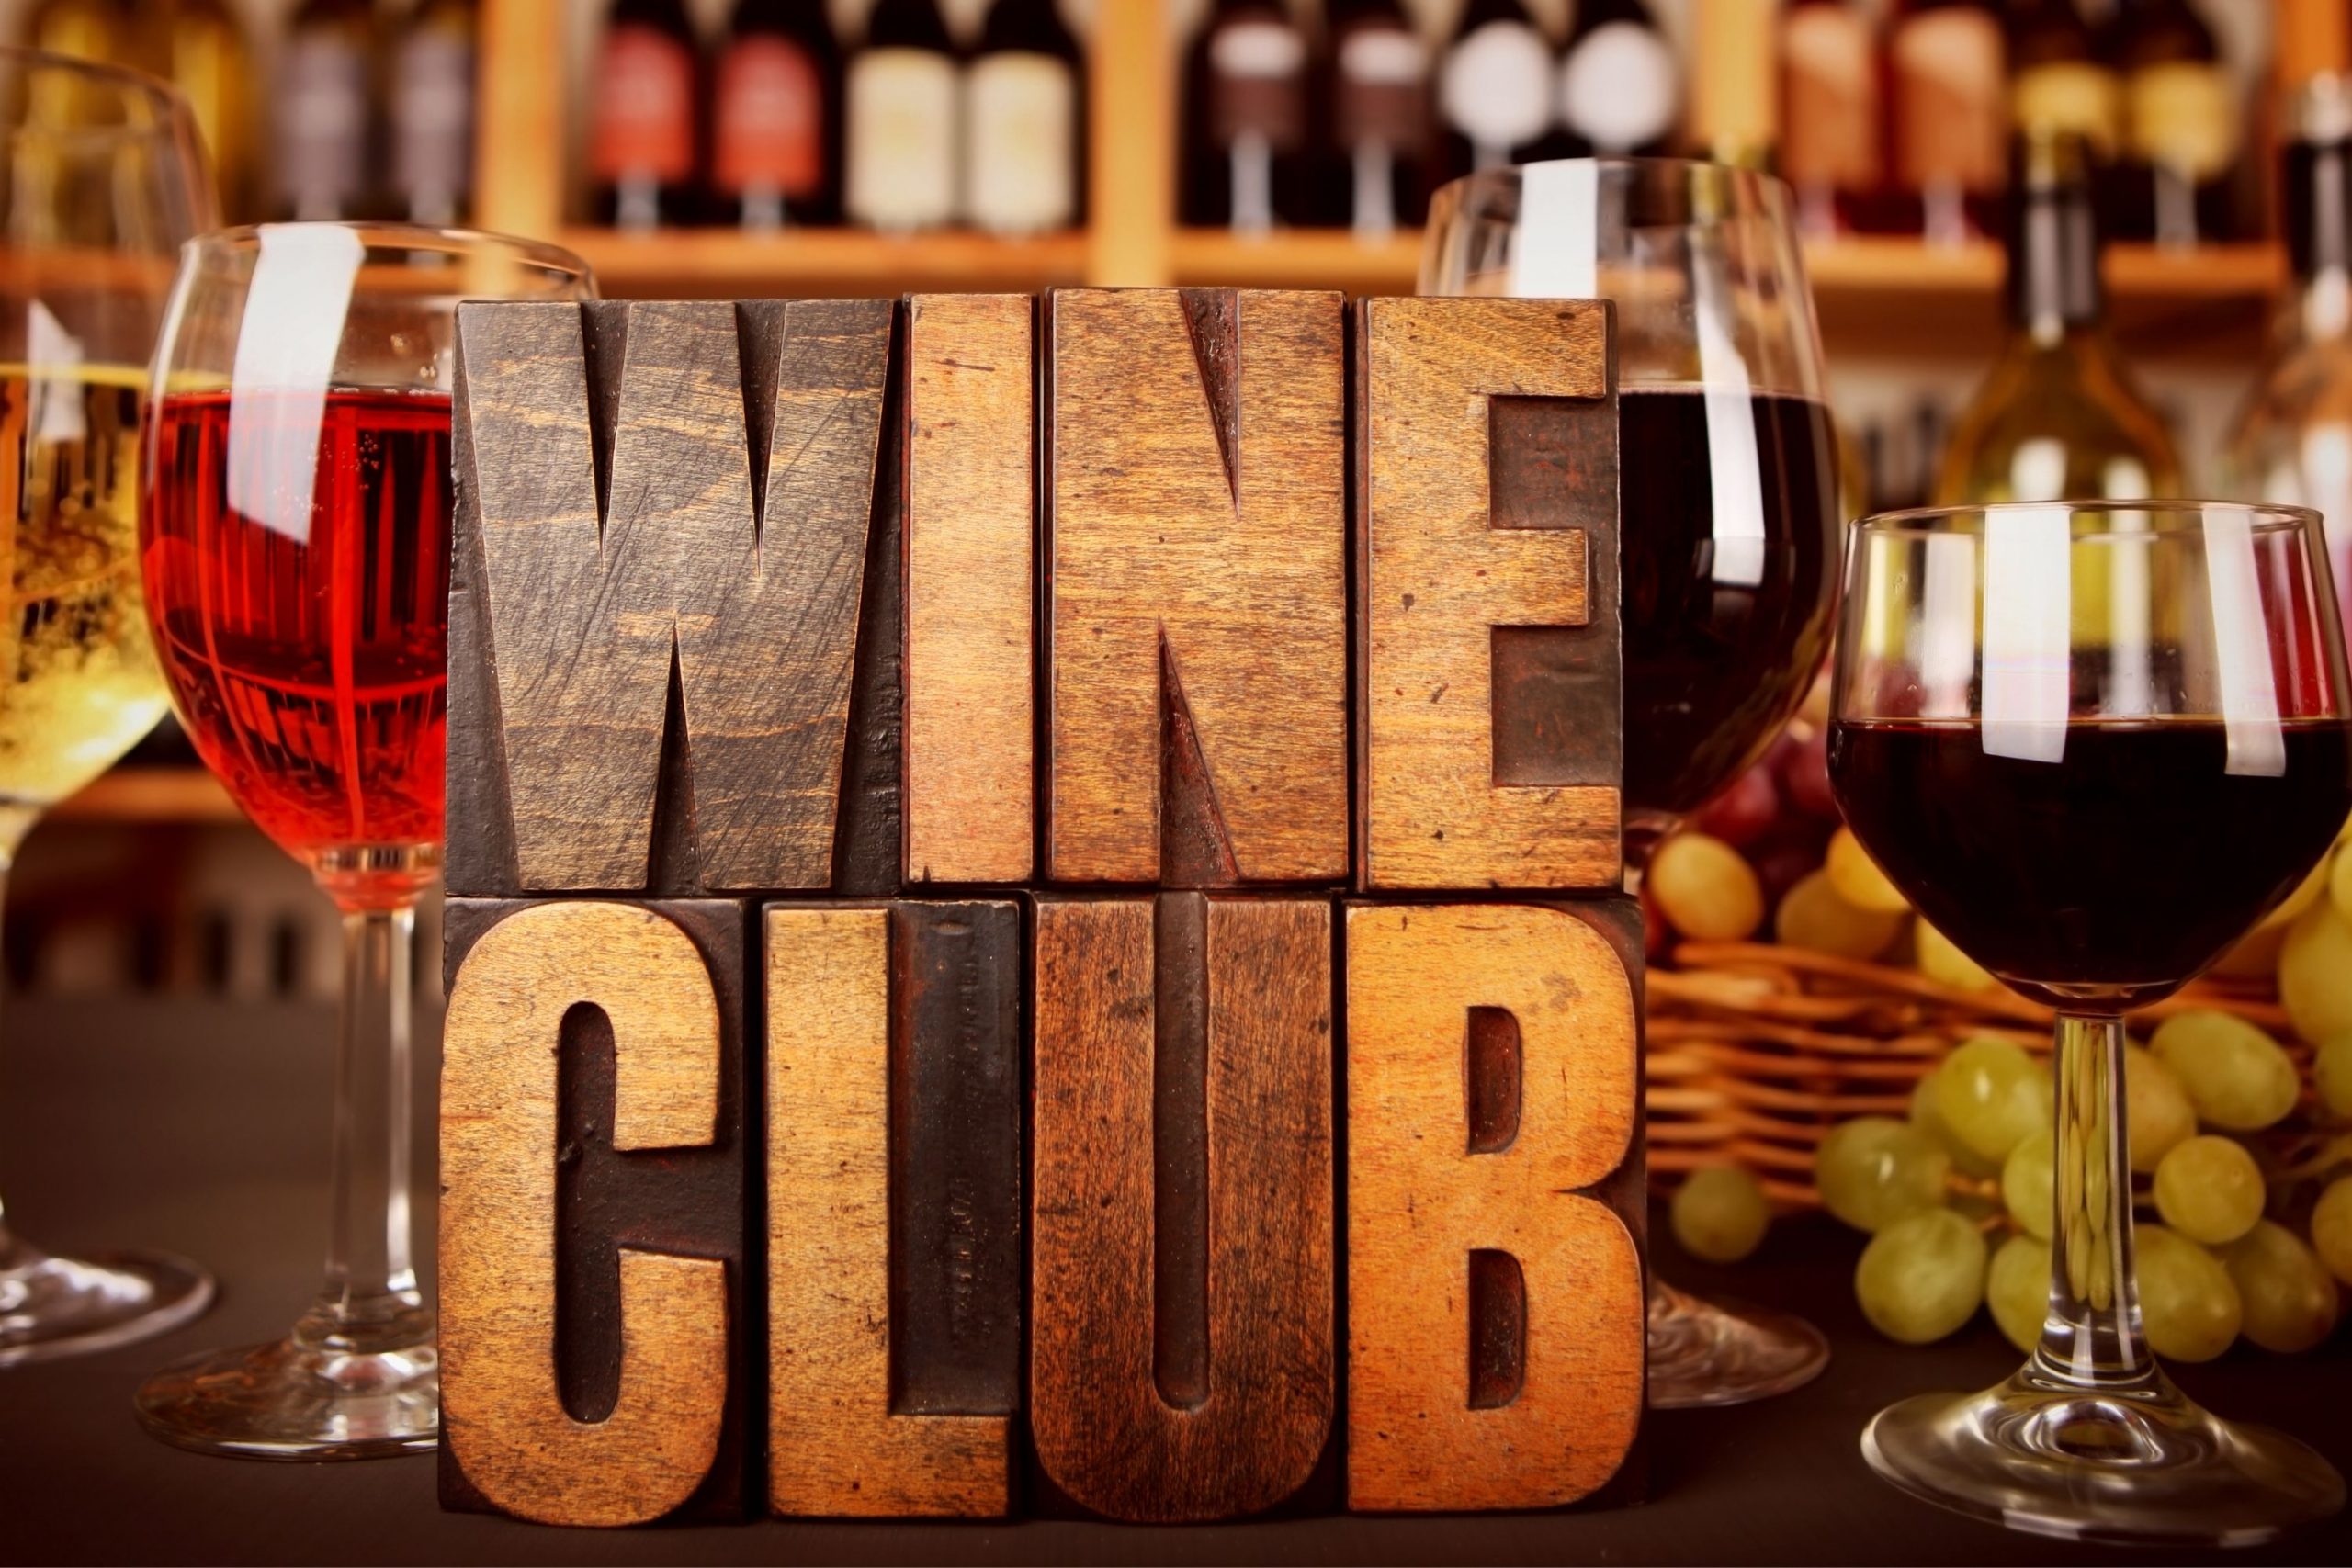 Wine Club Subscription